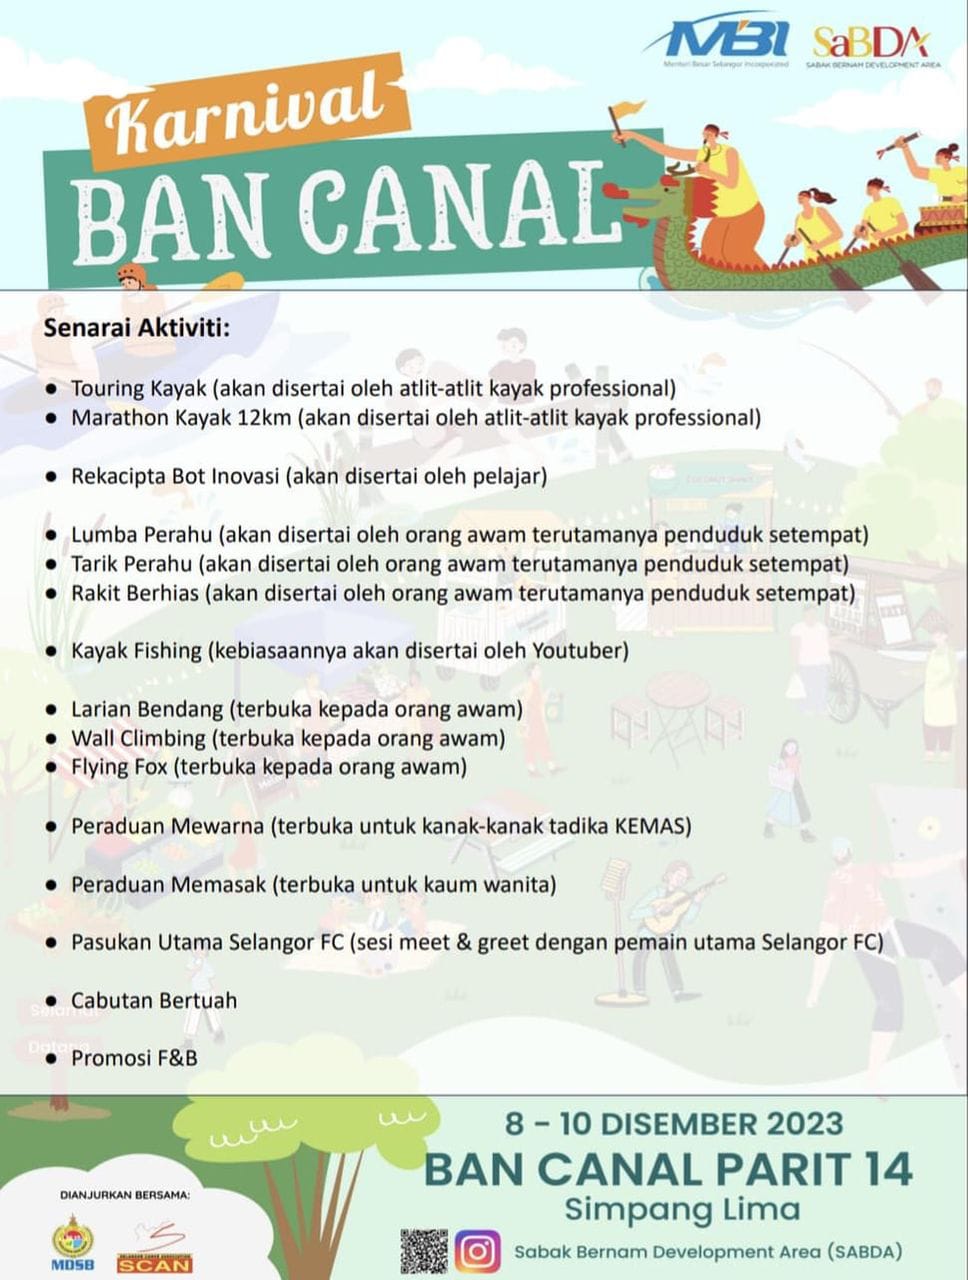 Karnival Ban Canal